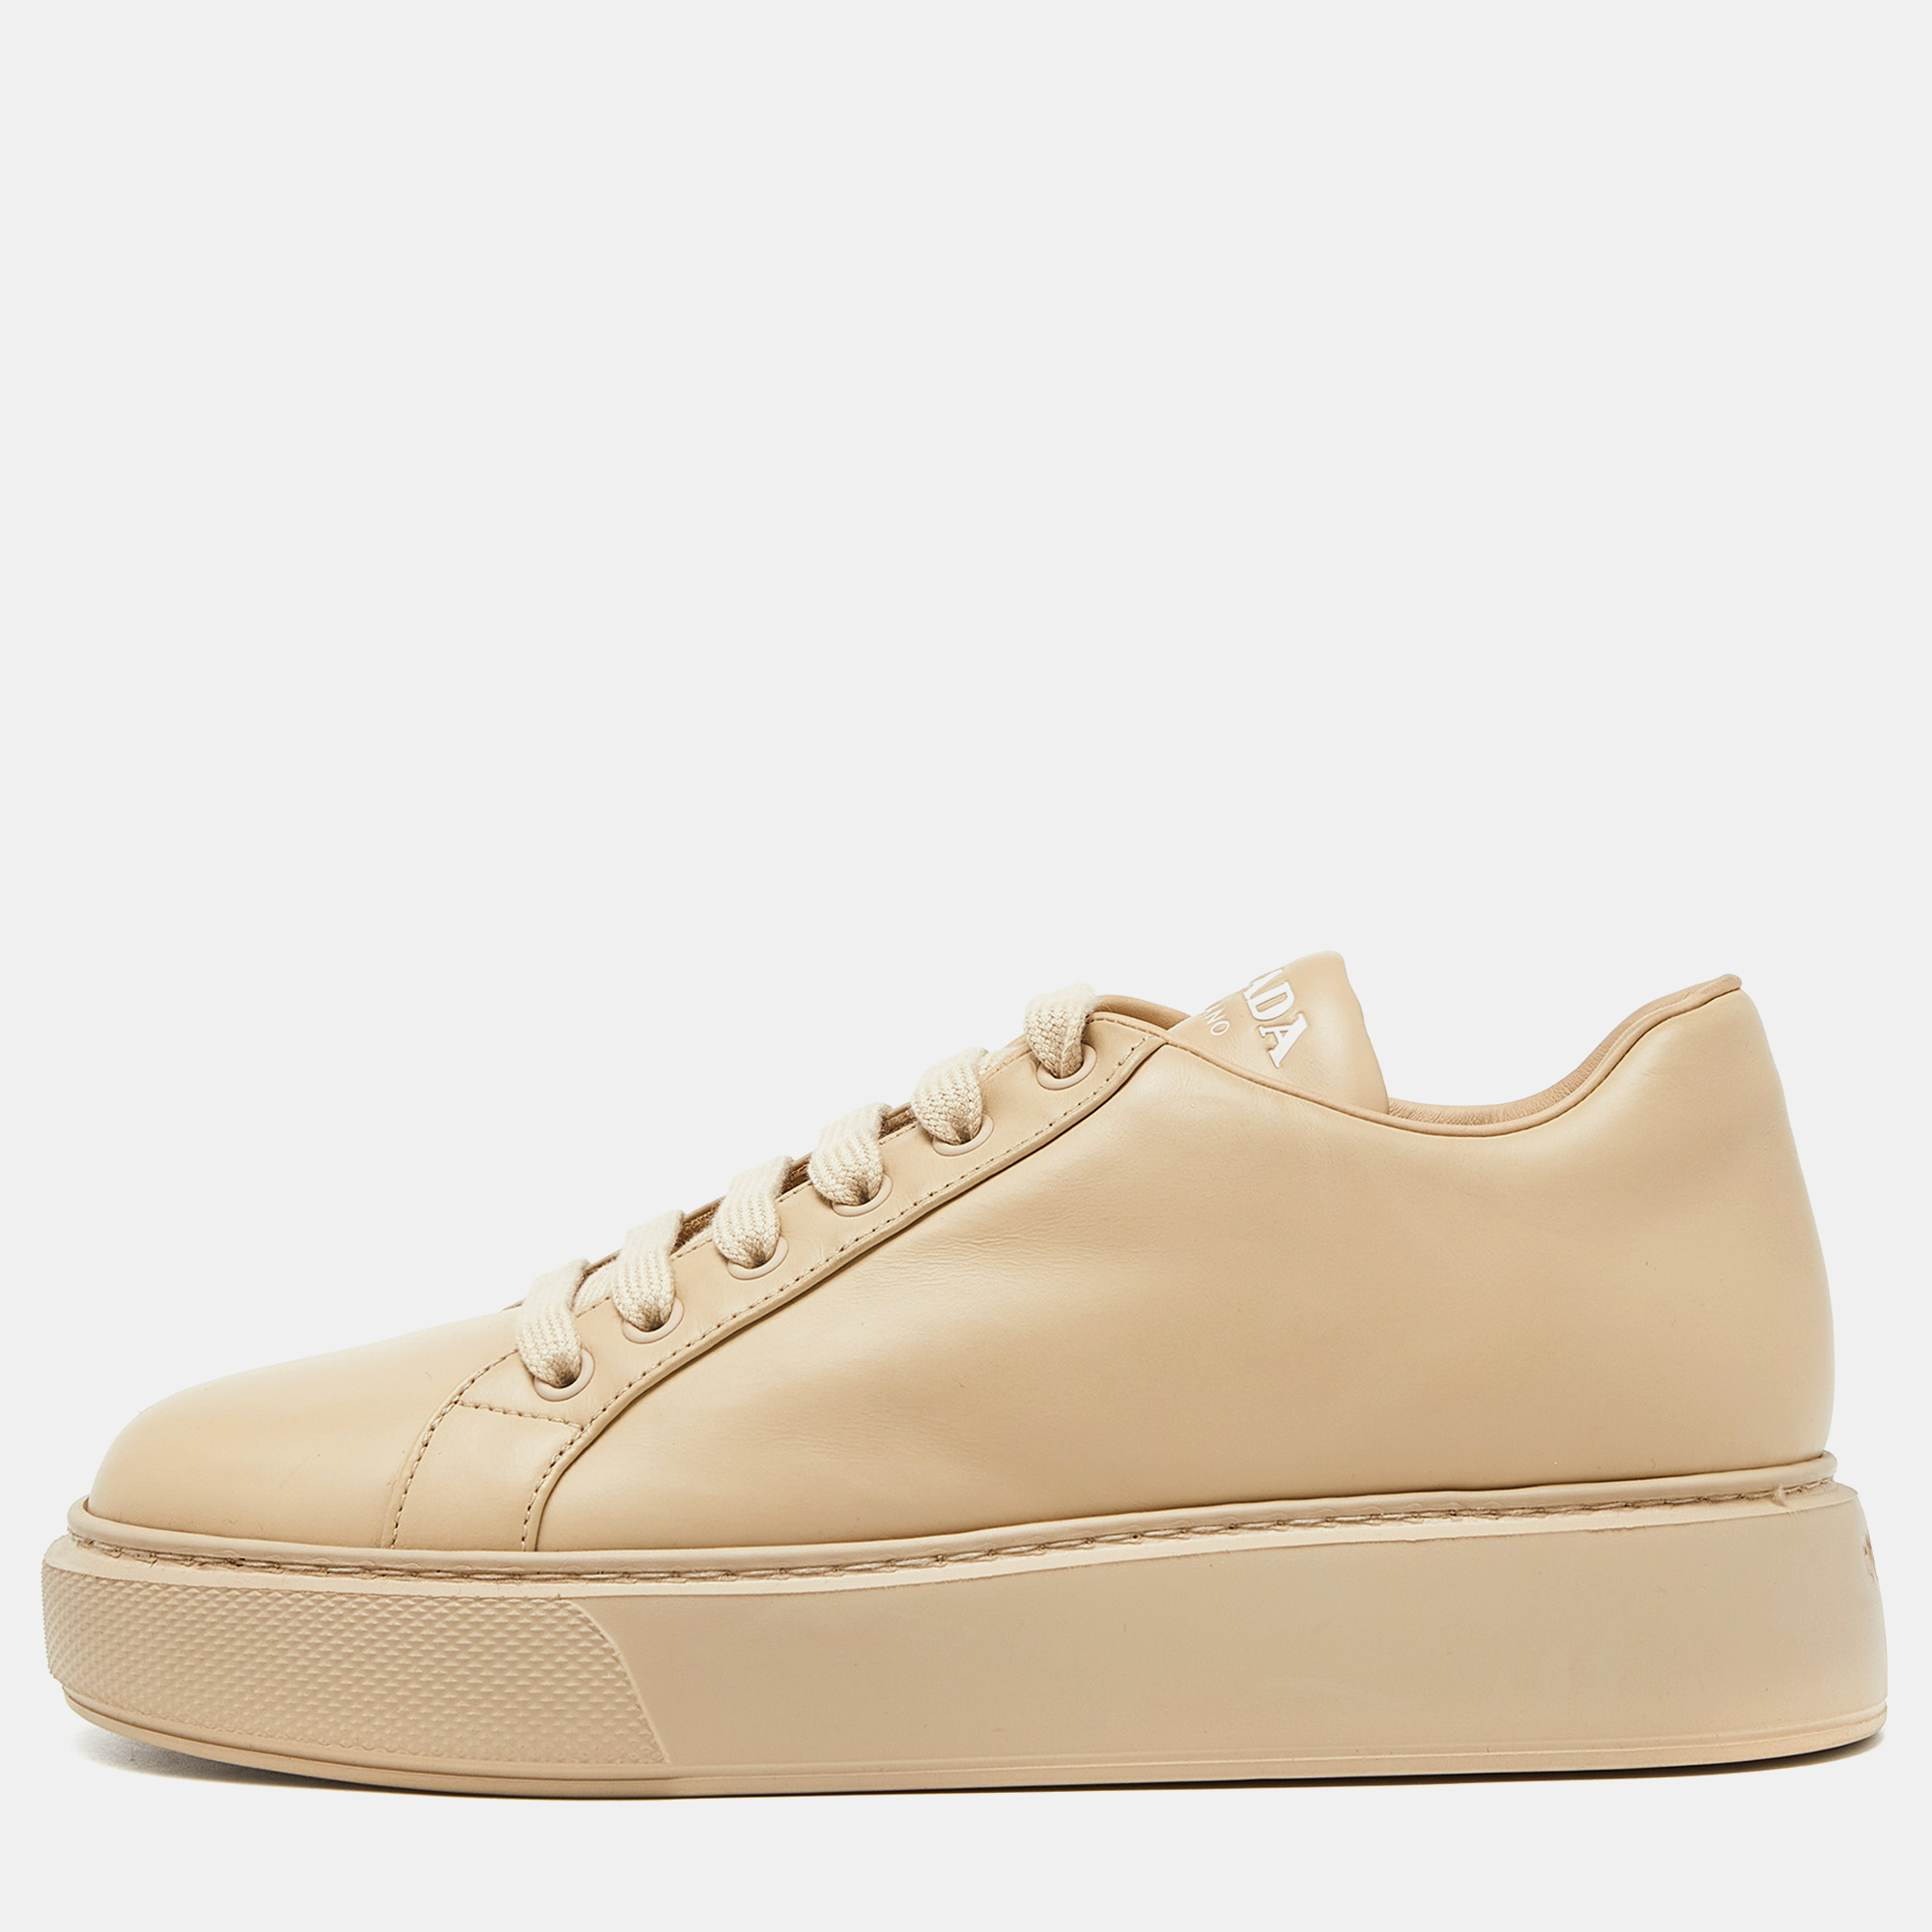 Prada beige leather low top sneakers size 39